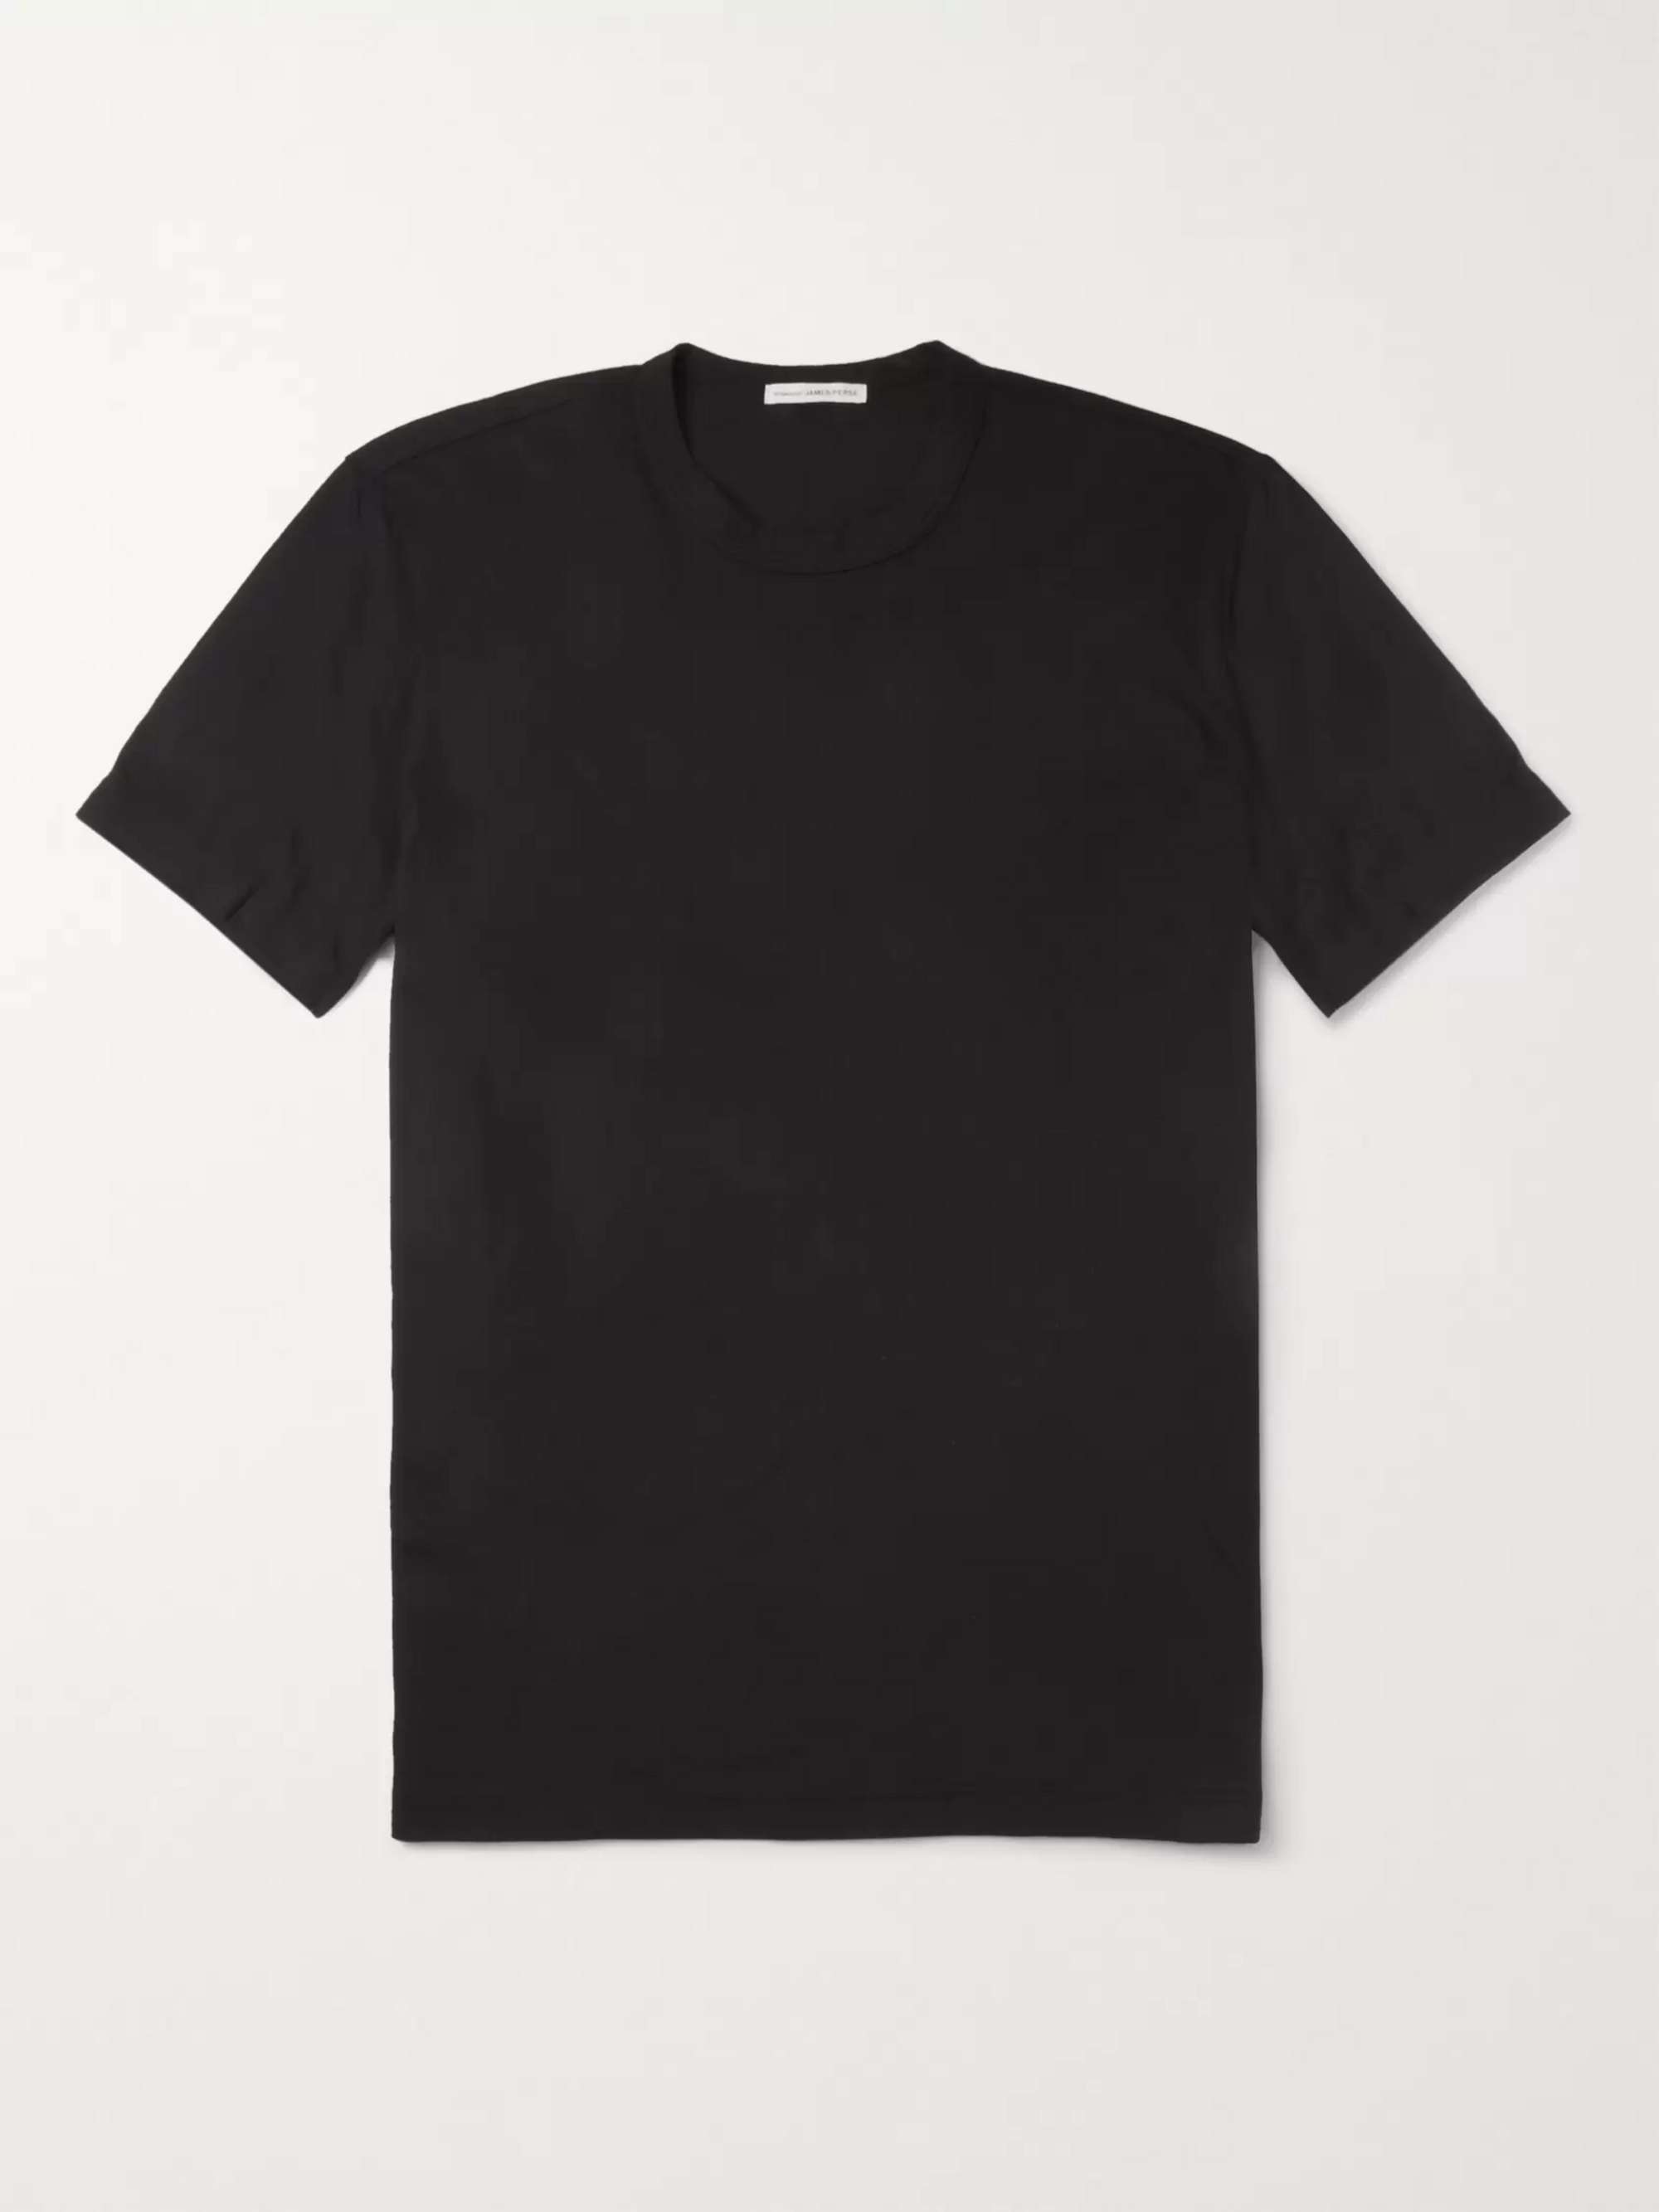 Mens T-shirts James Perse T-shirts Save 40% James Perse Cotton Crewneck Black T-shirt for Men 